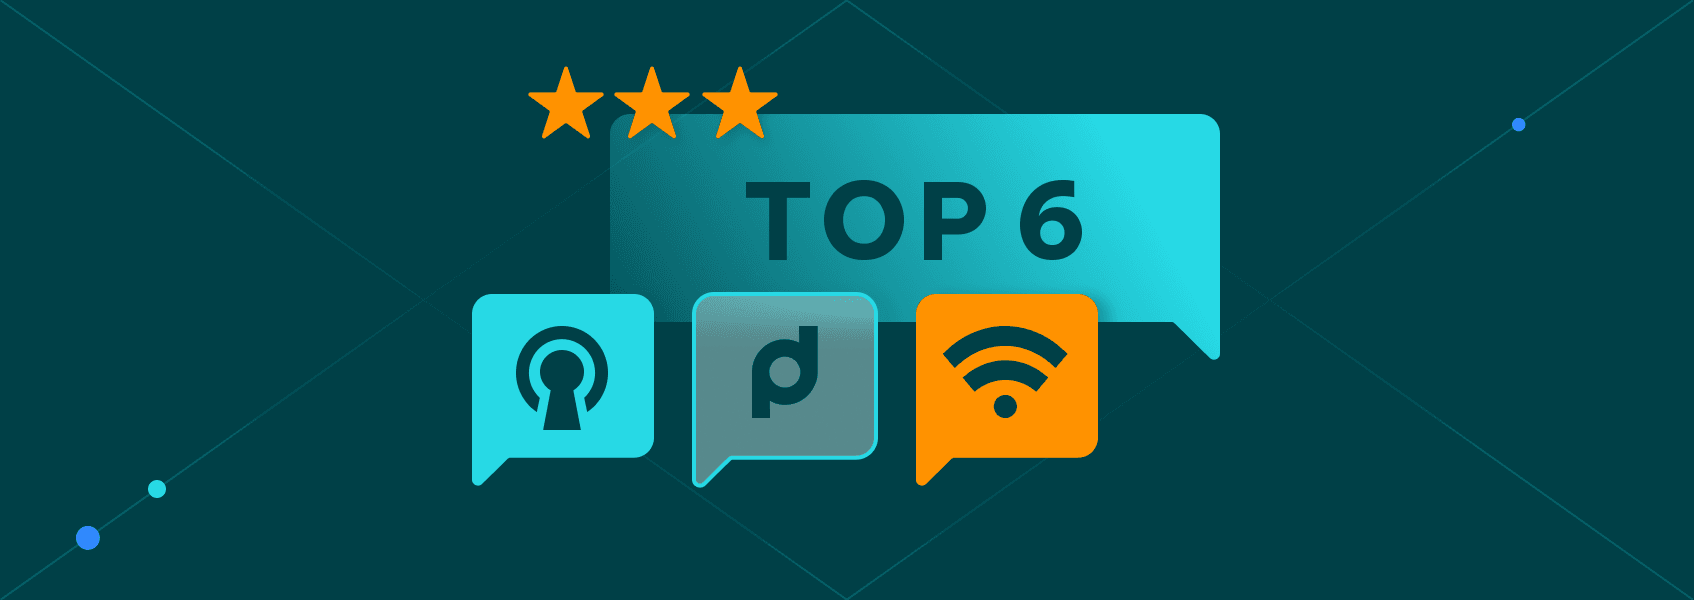 top 6 best proxy client programs featured